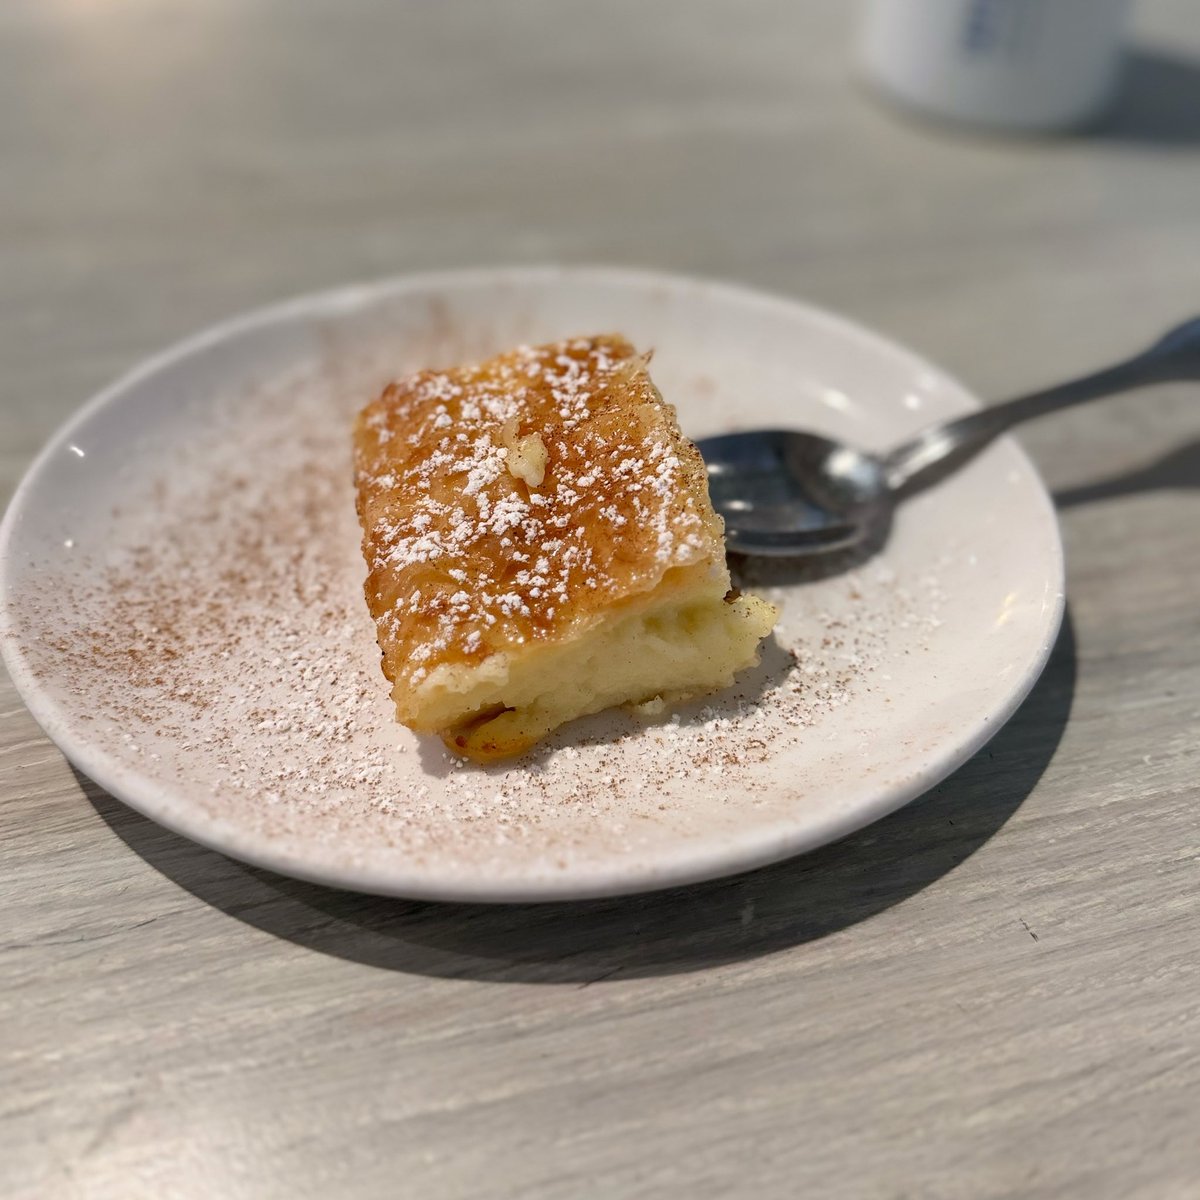 Sometimes you just want dessert. 

#tavernakyclades #dessert #sweet #sugarsugar #delicious #yum #greeksweets #greekfood #greekdesserts #greekrestaurant #eats #restaurant #queensny